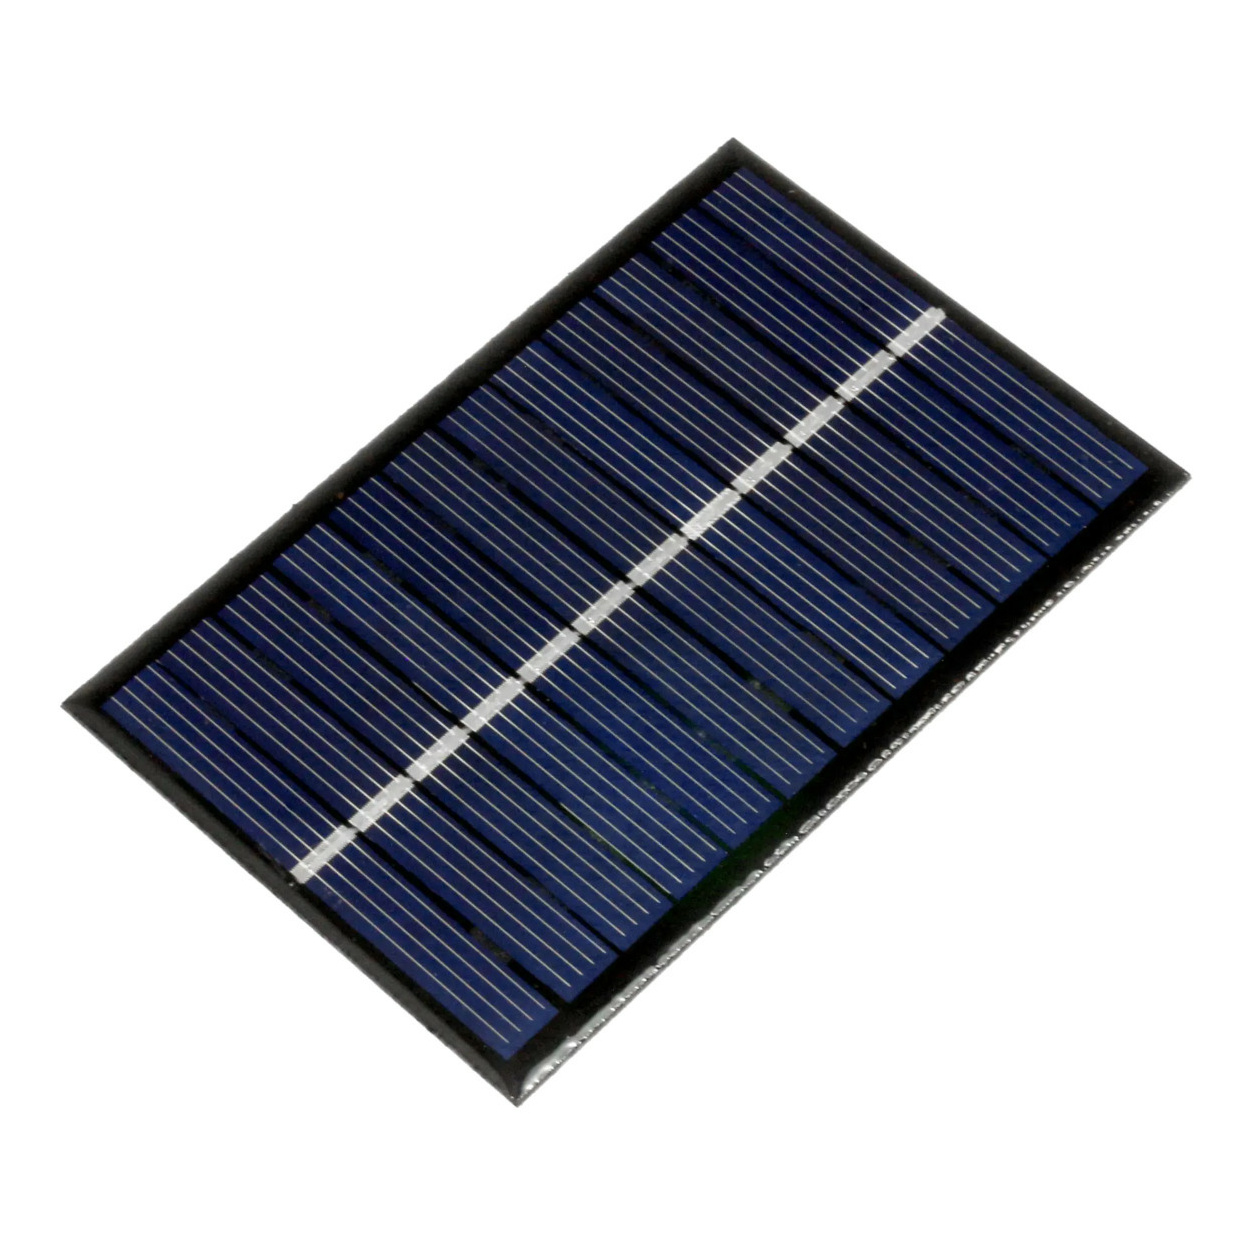 5V 250 mA Solar Panel for DIY Electronics Projects & Robotics